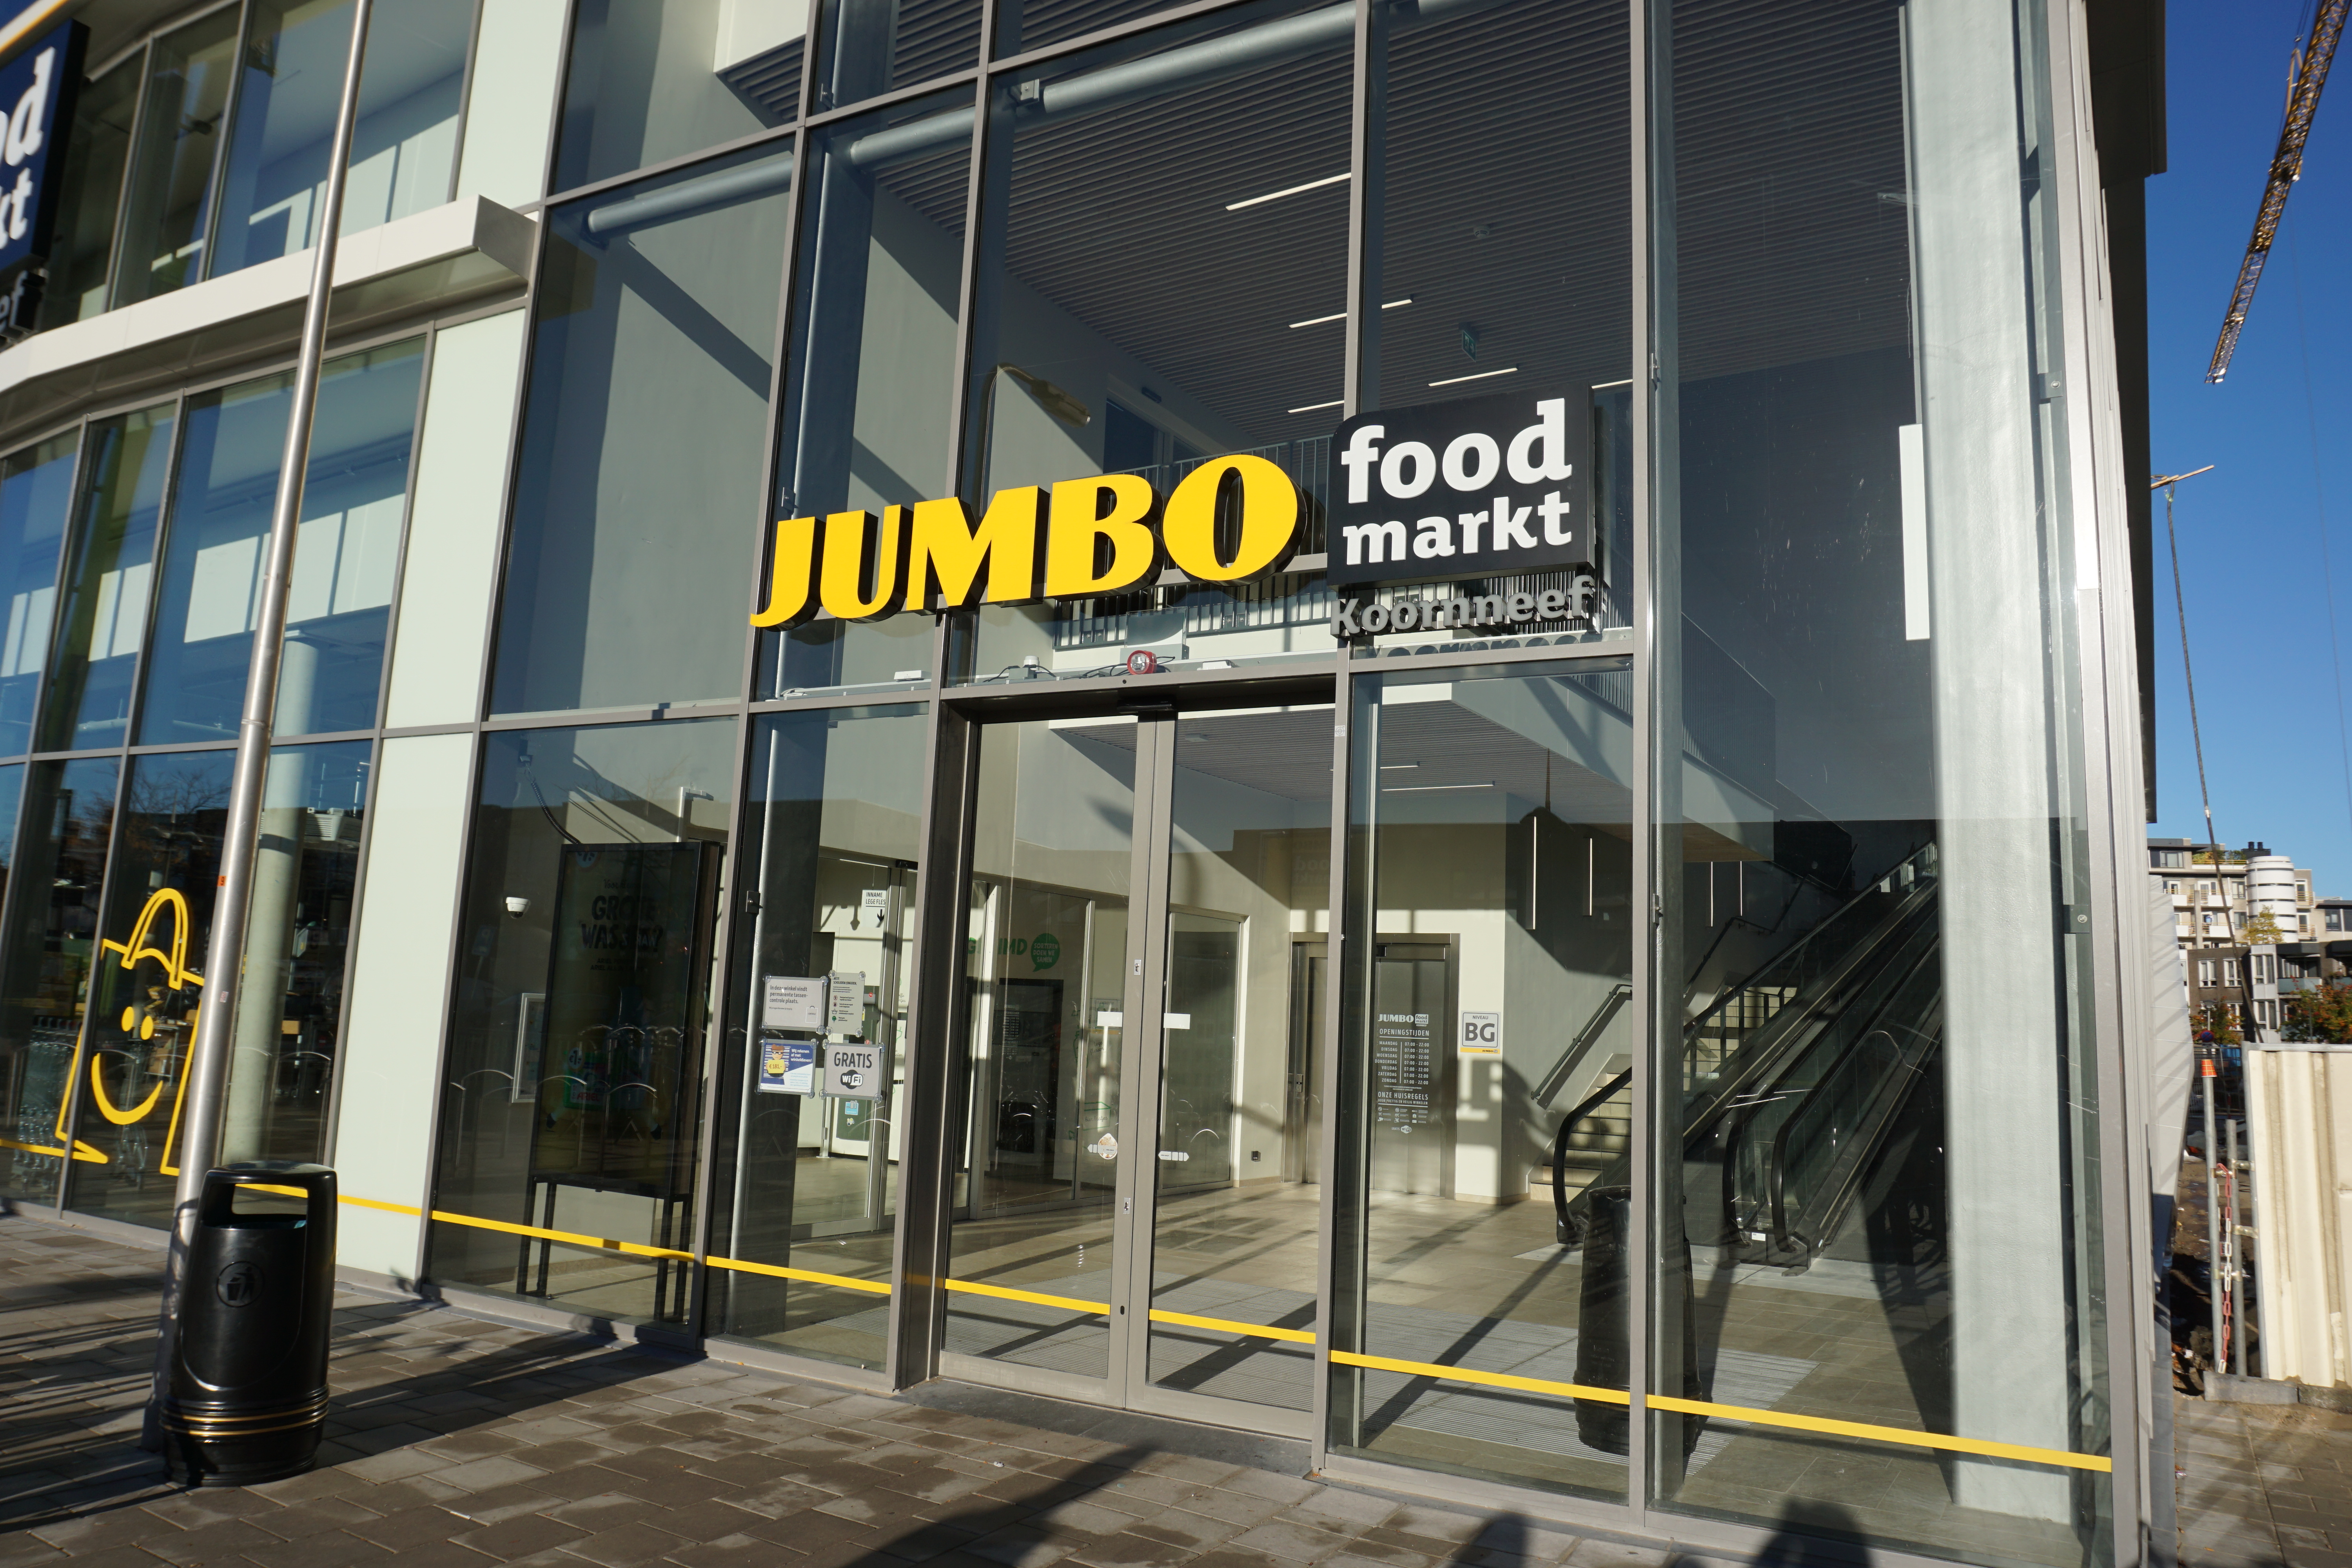 Jumbo food market storefront in the netherlands